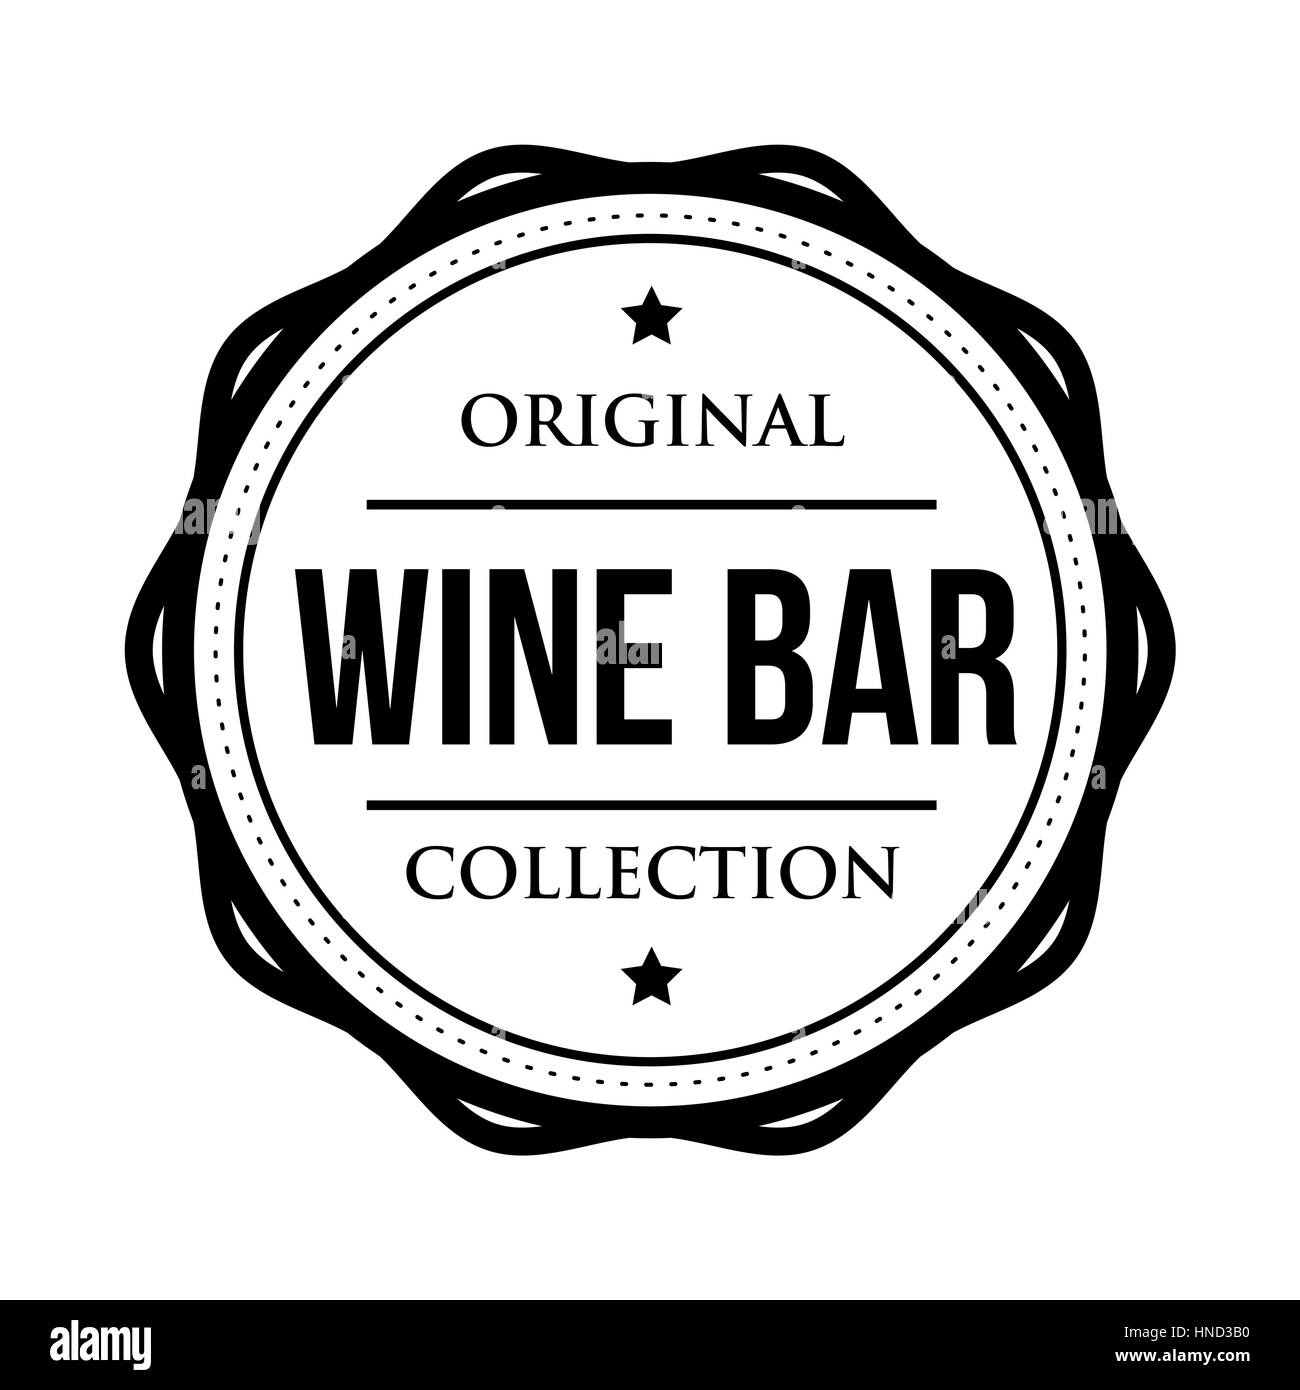 Wine bar logo vintage isolated label Stock Vector Image & Art - Alamy